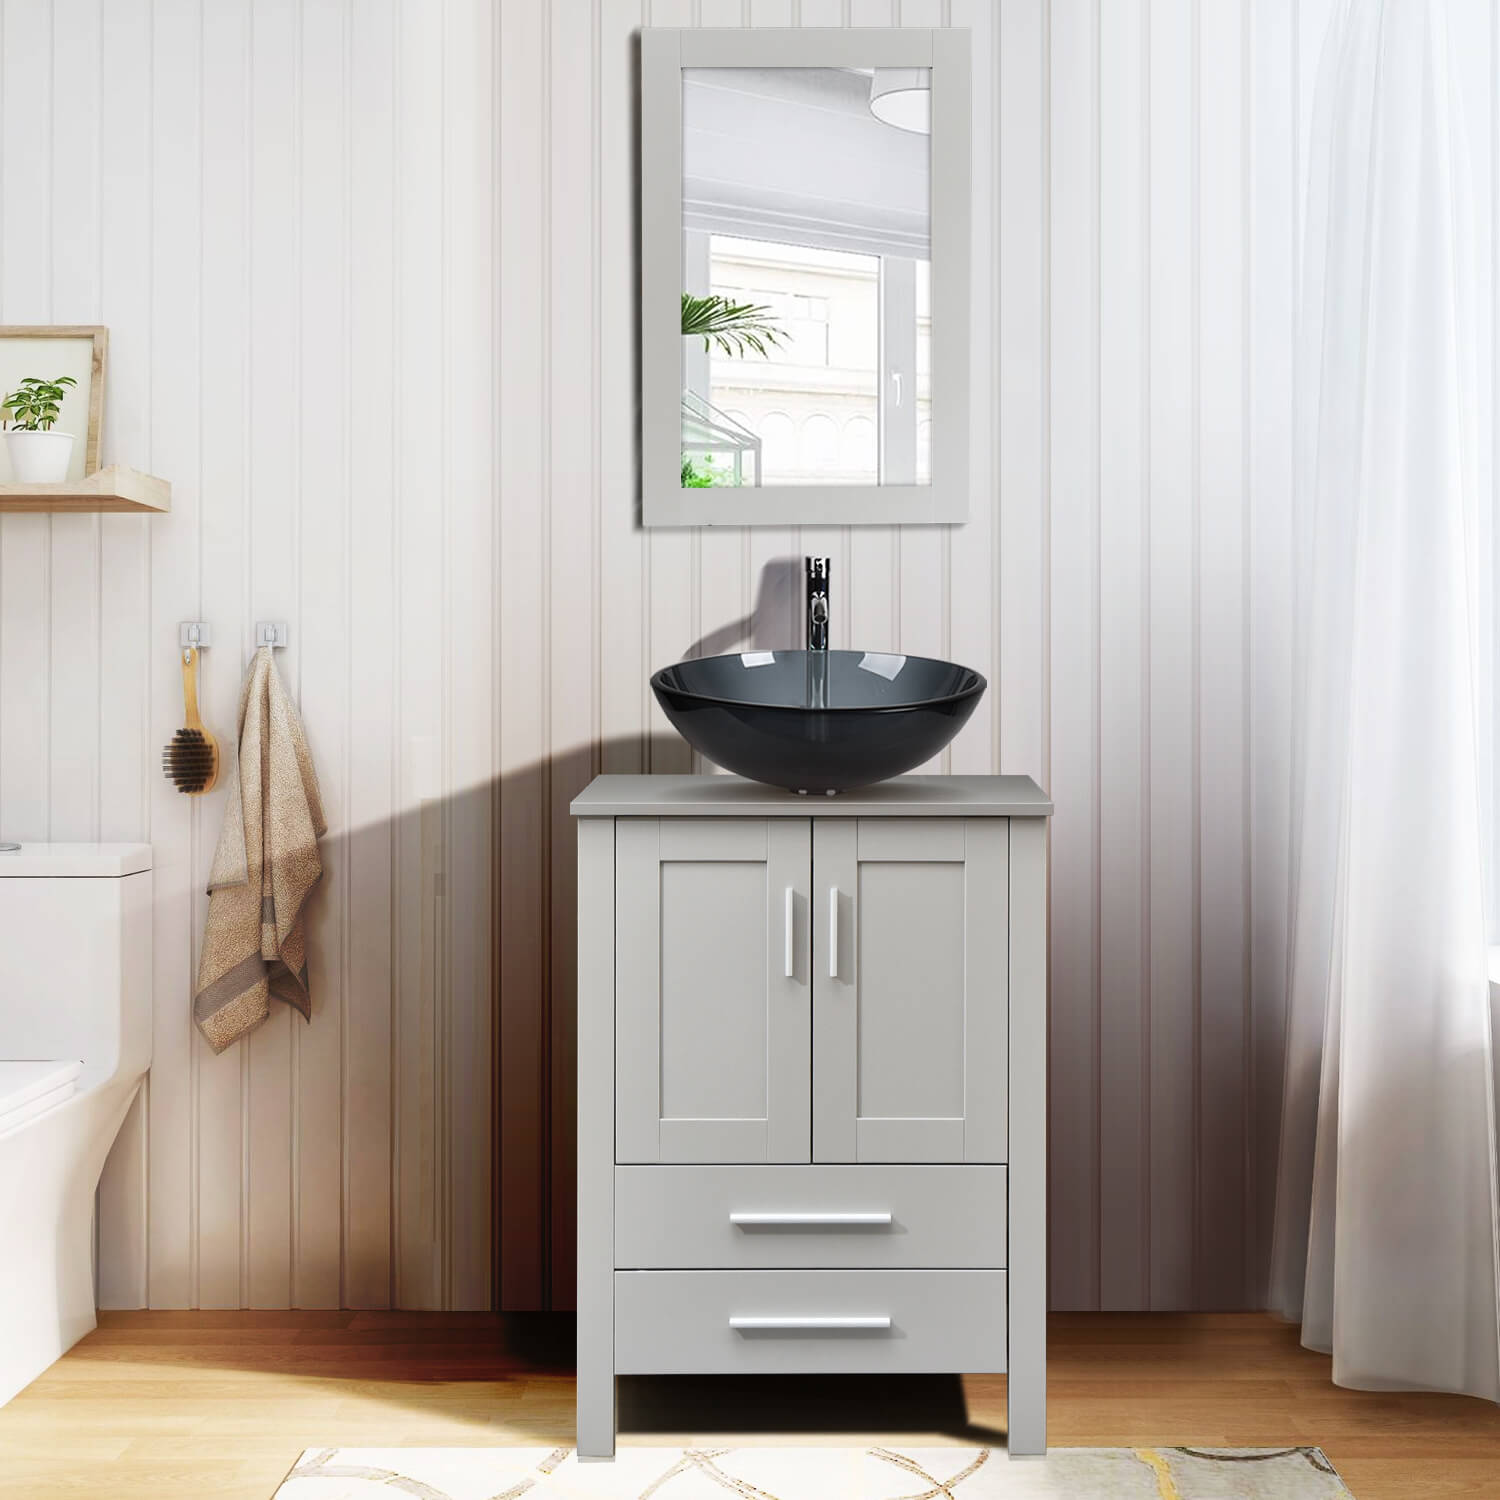 Elecwish gray wood bathroom vanity with bluish grey glass sink BG003 in bathroom